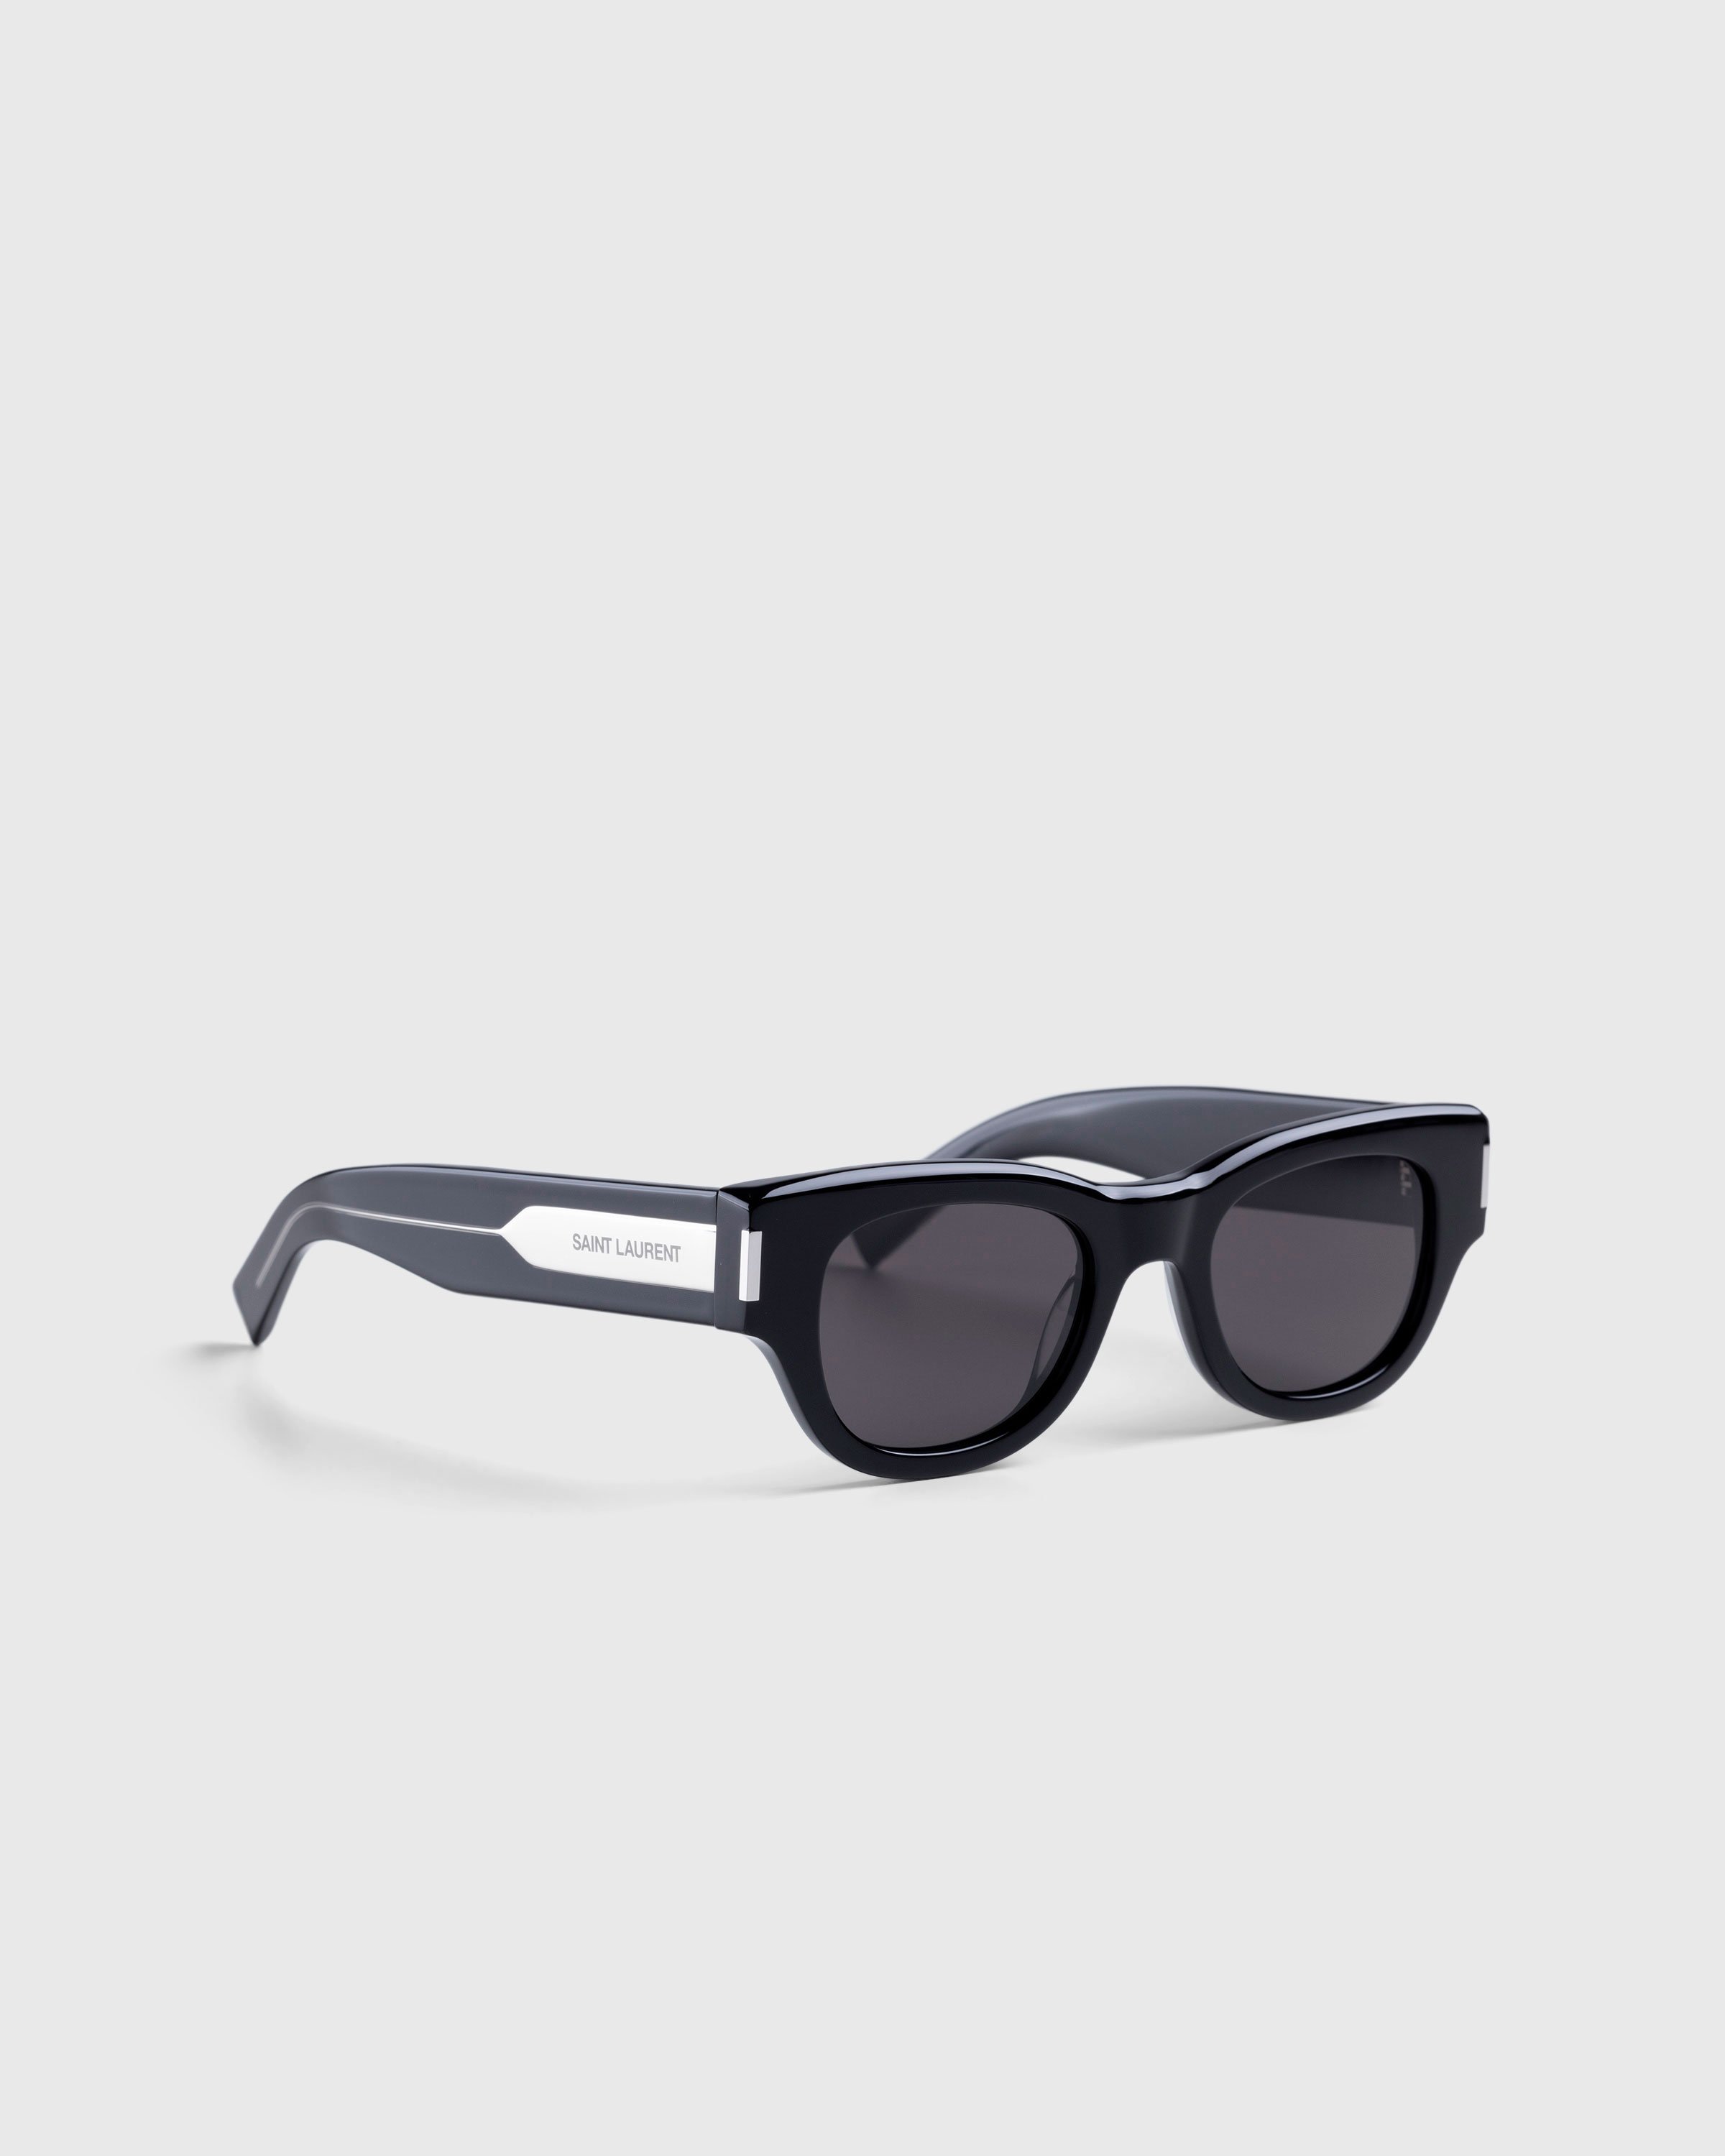 Saint Laurent - SL 573 Cat Eye Sunglasses Black/Crystal/Grey - Accessories - Multi - Image 2